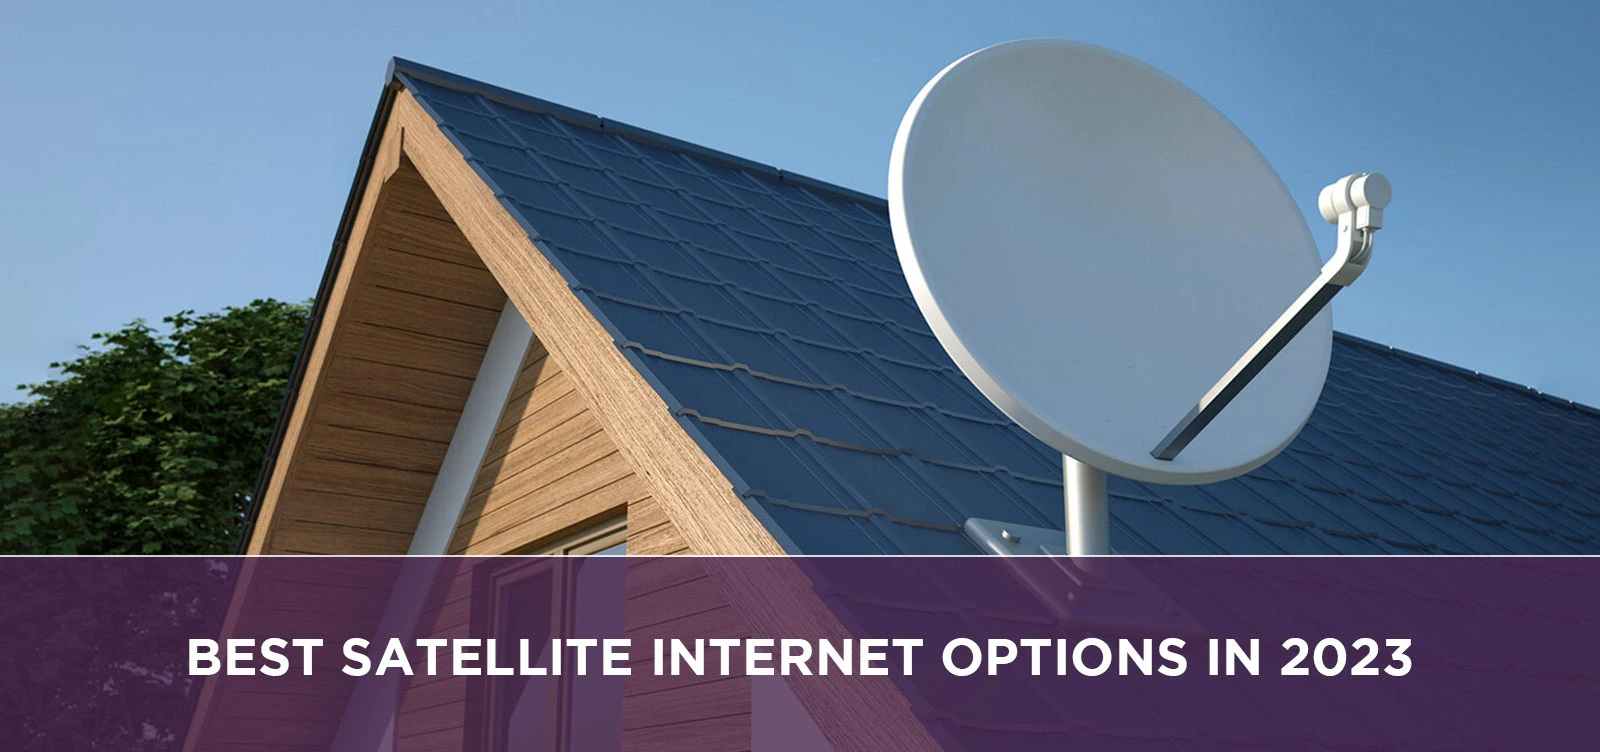 Best Satellite Internet Options in 2023